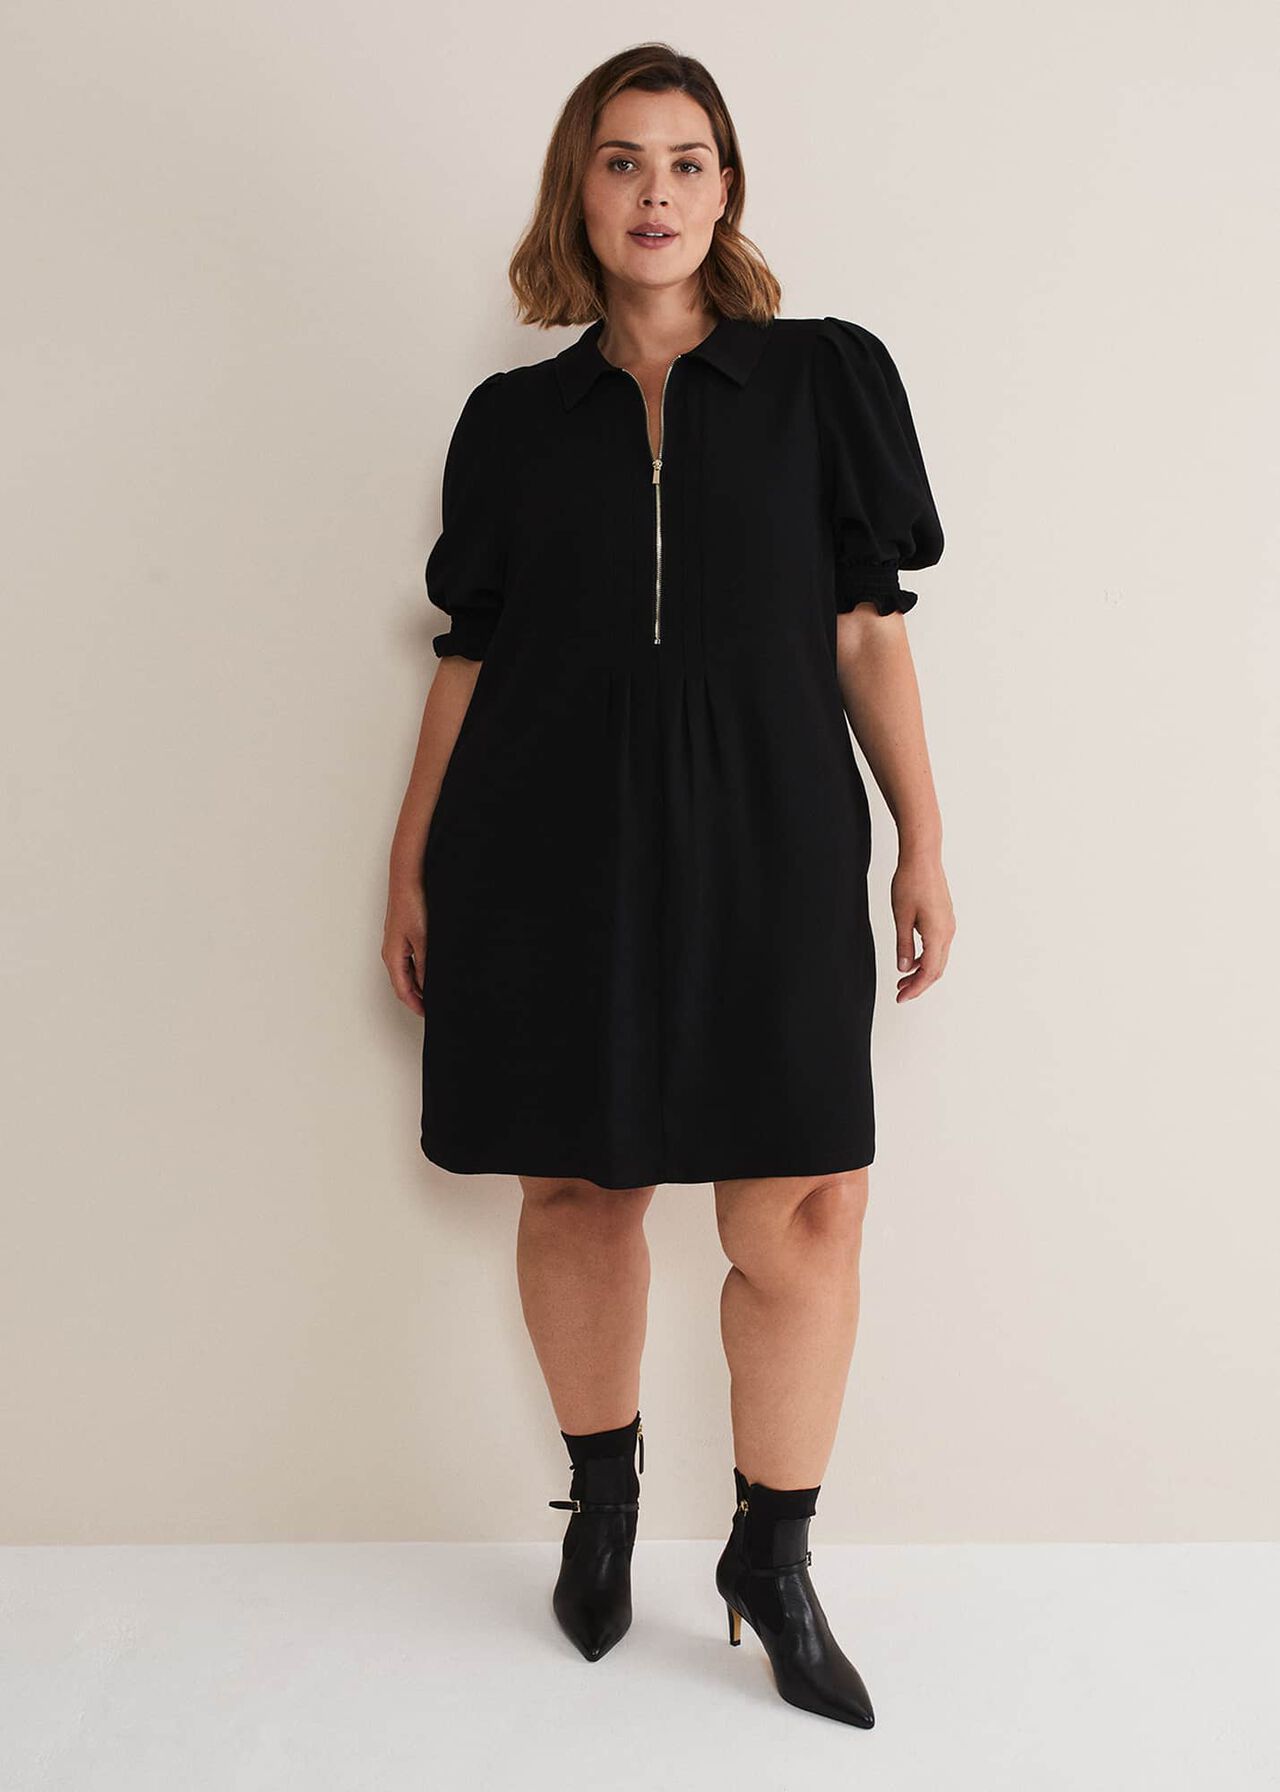 Candice Black Zip Mini Dress